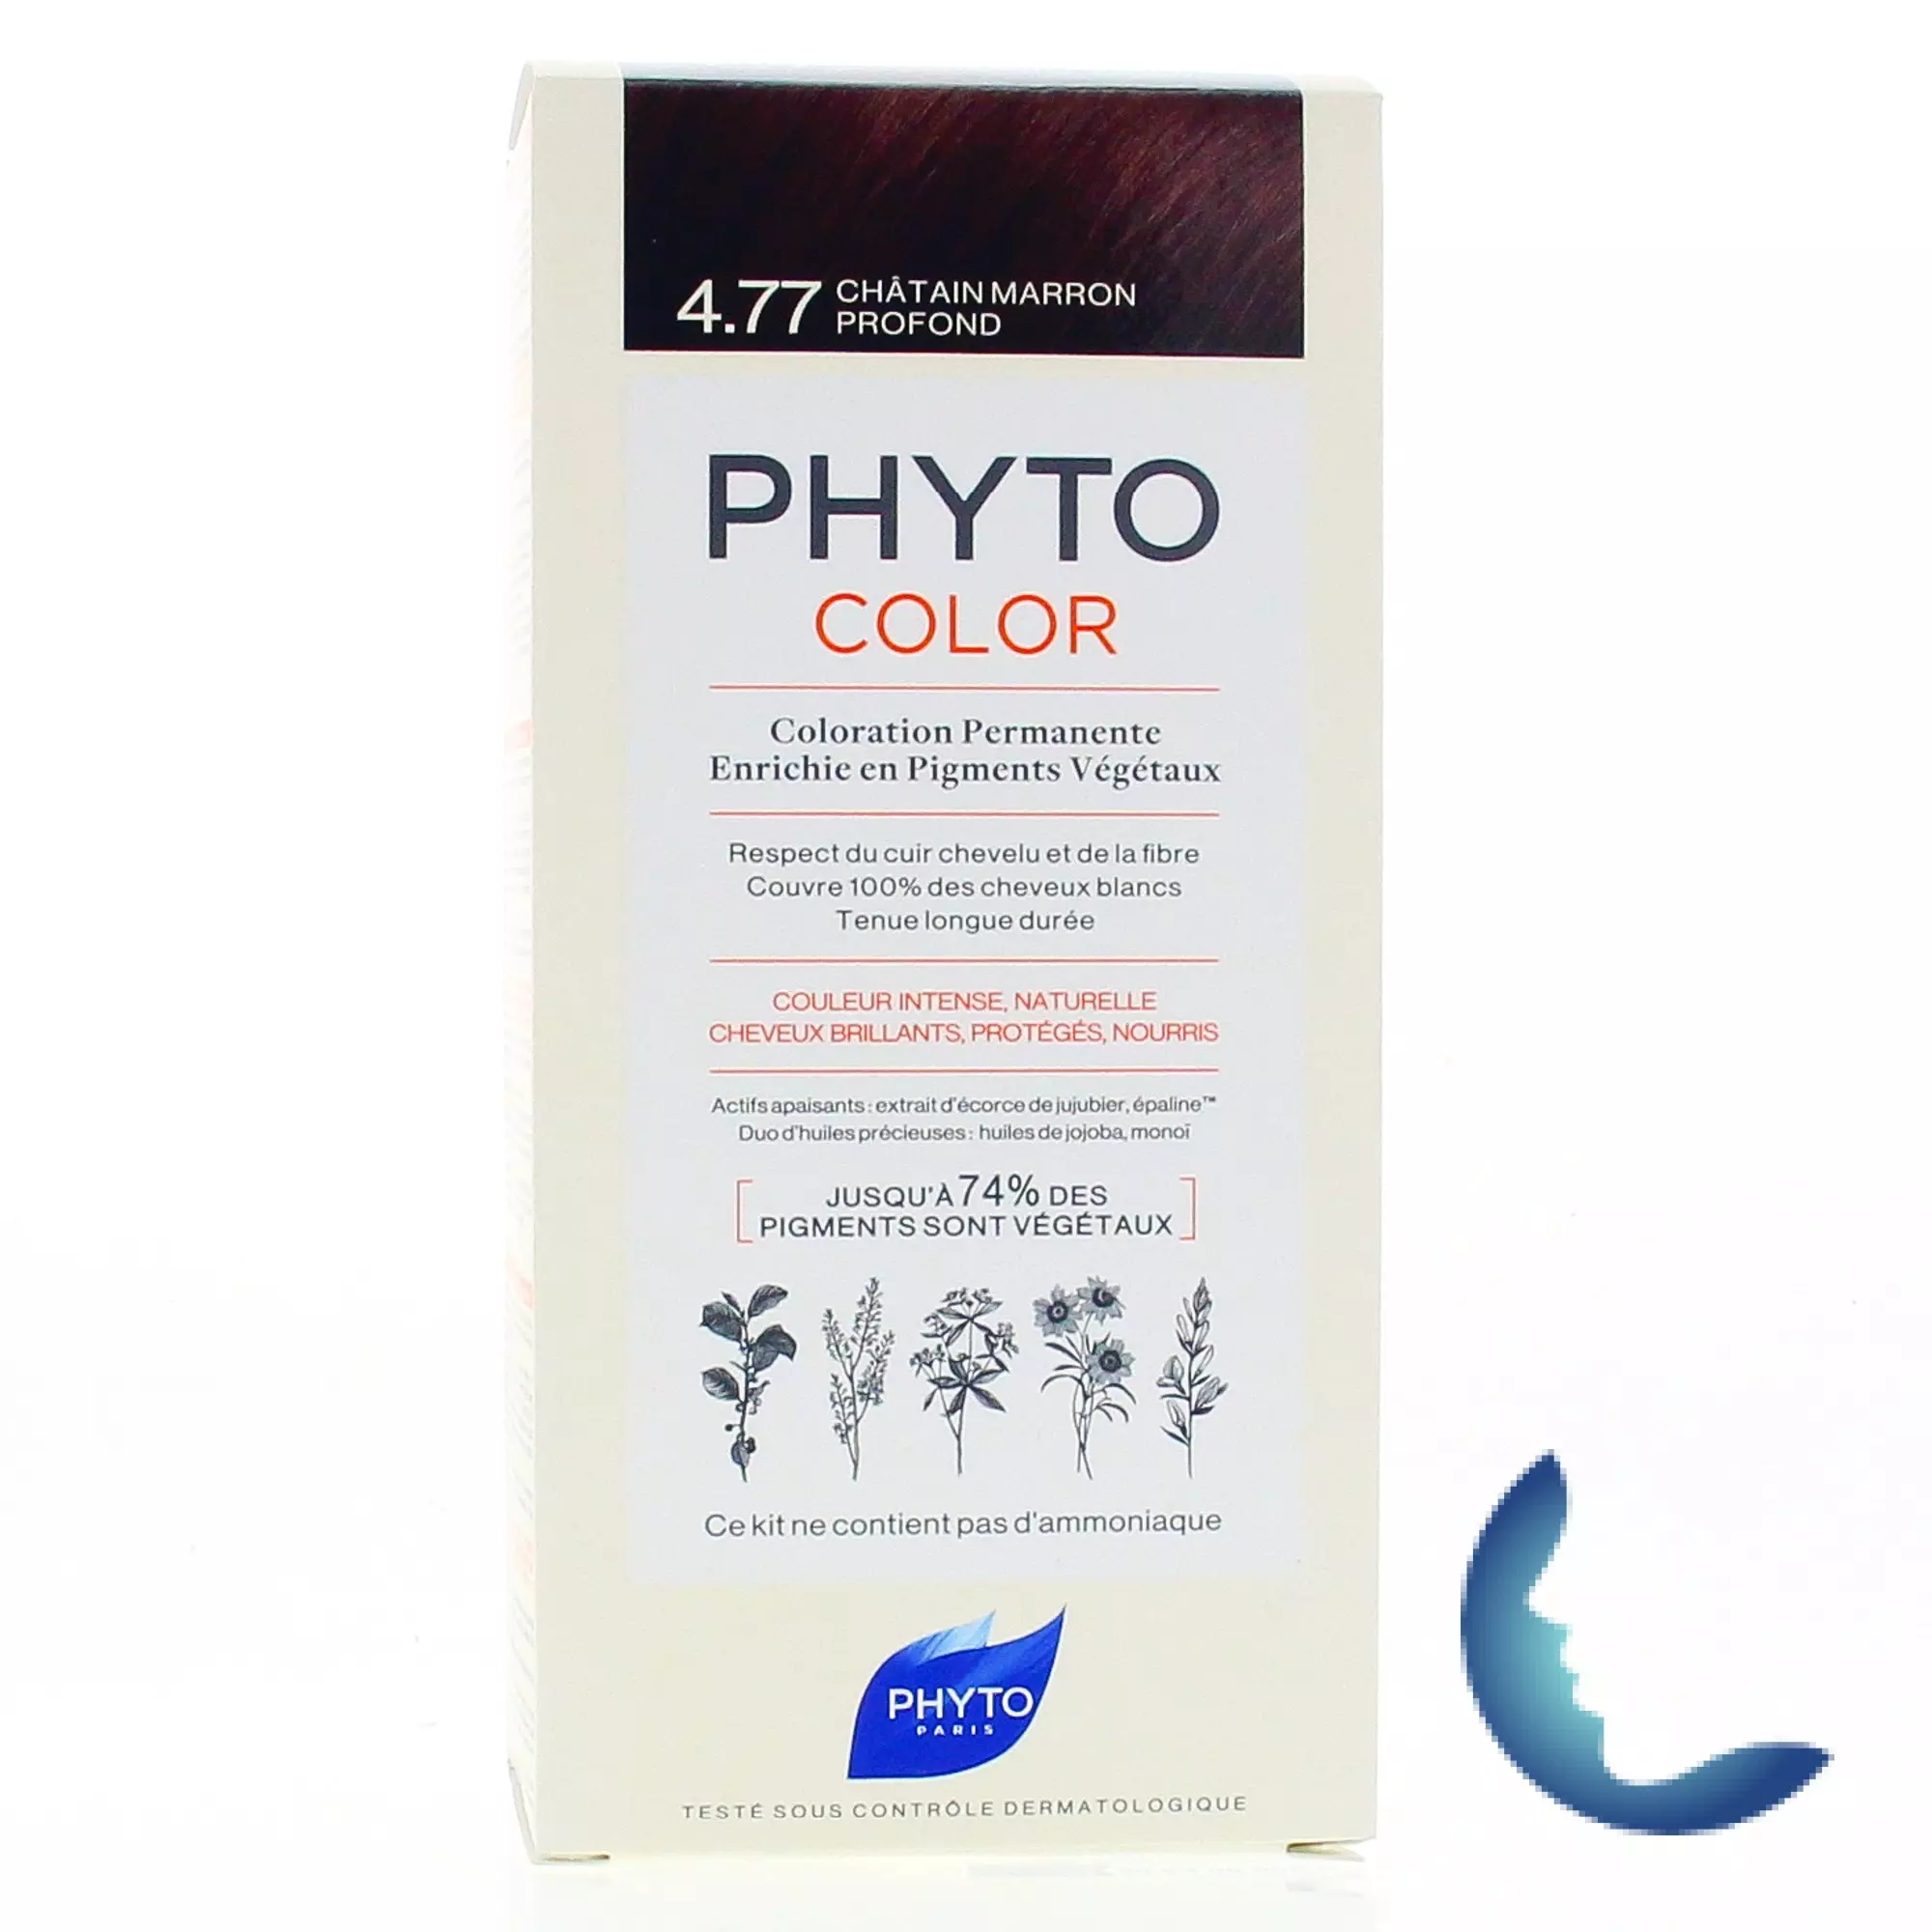 PHYTO Phytocolor 4.77chatin marron profond